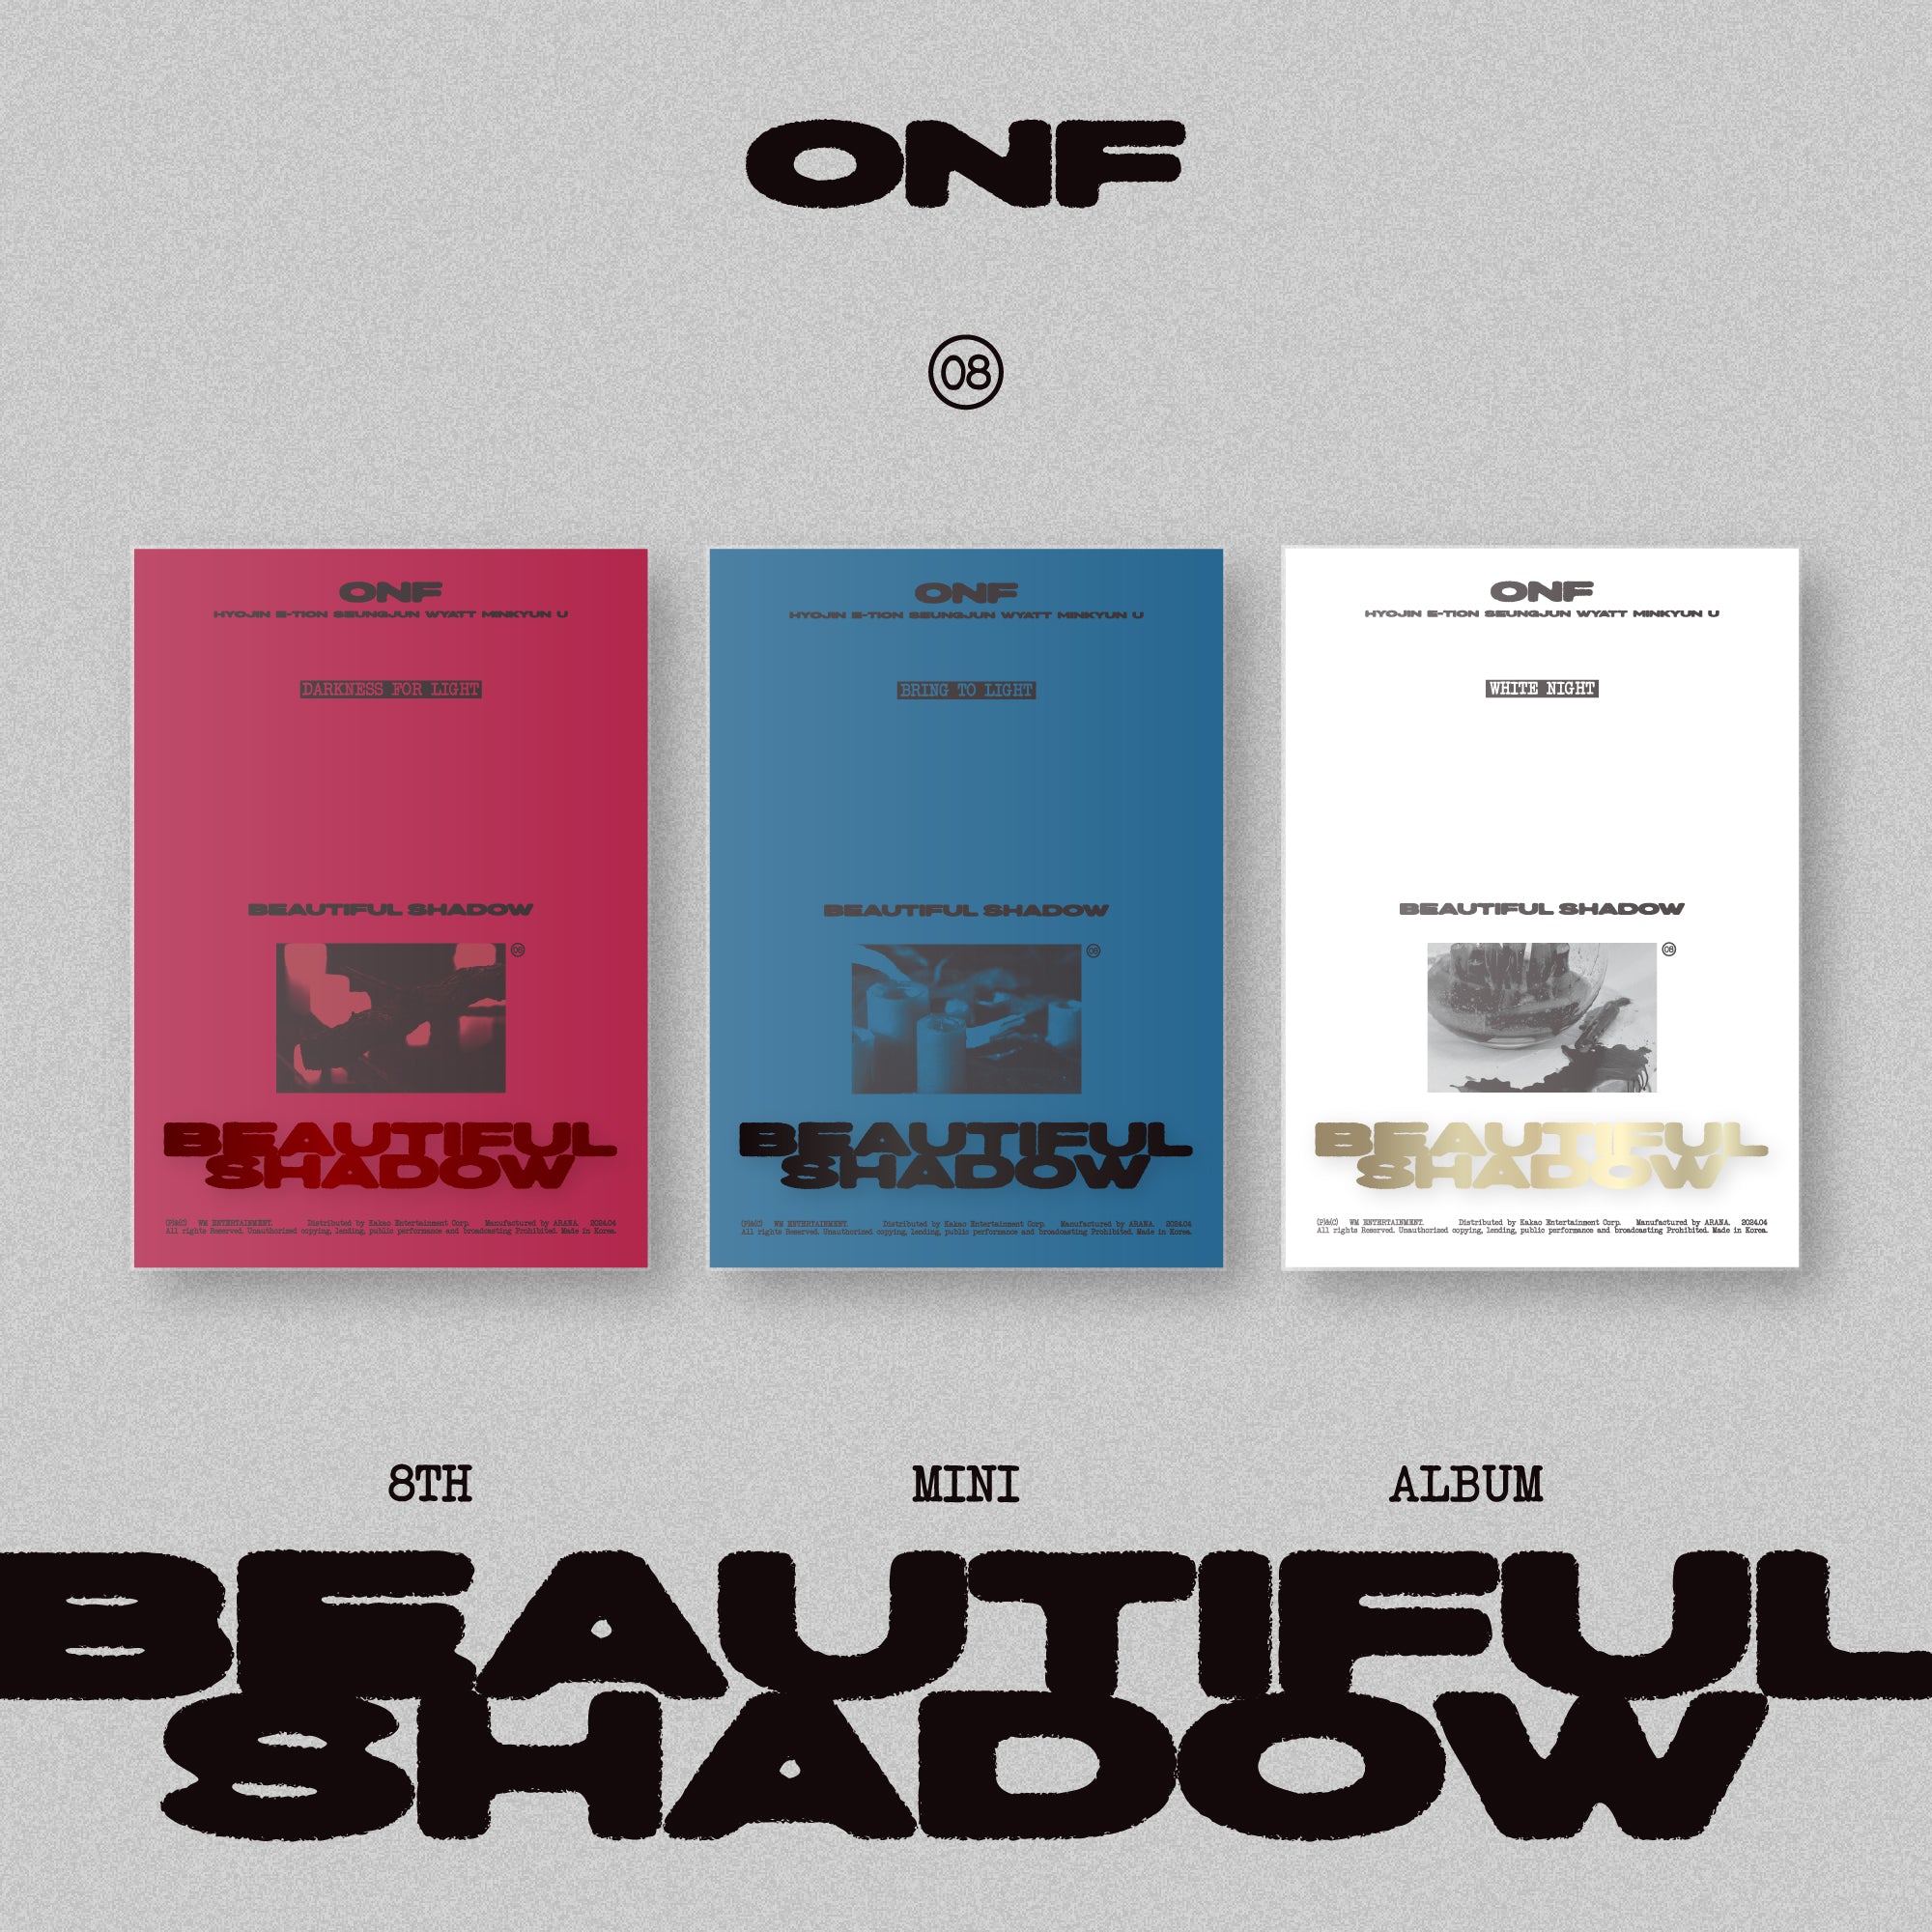 ONF - 8th Mini Album BEAUTIFUL SHADOW